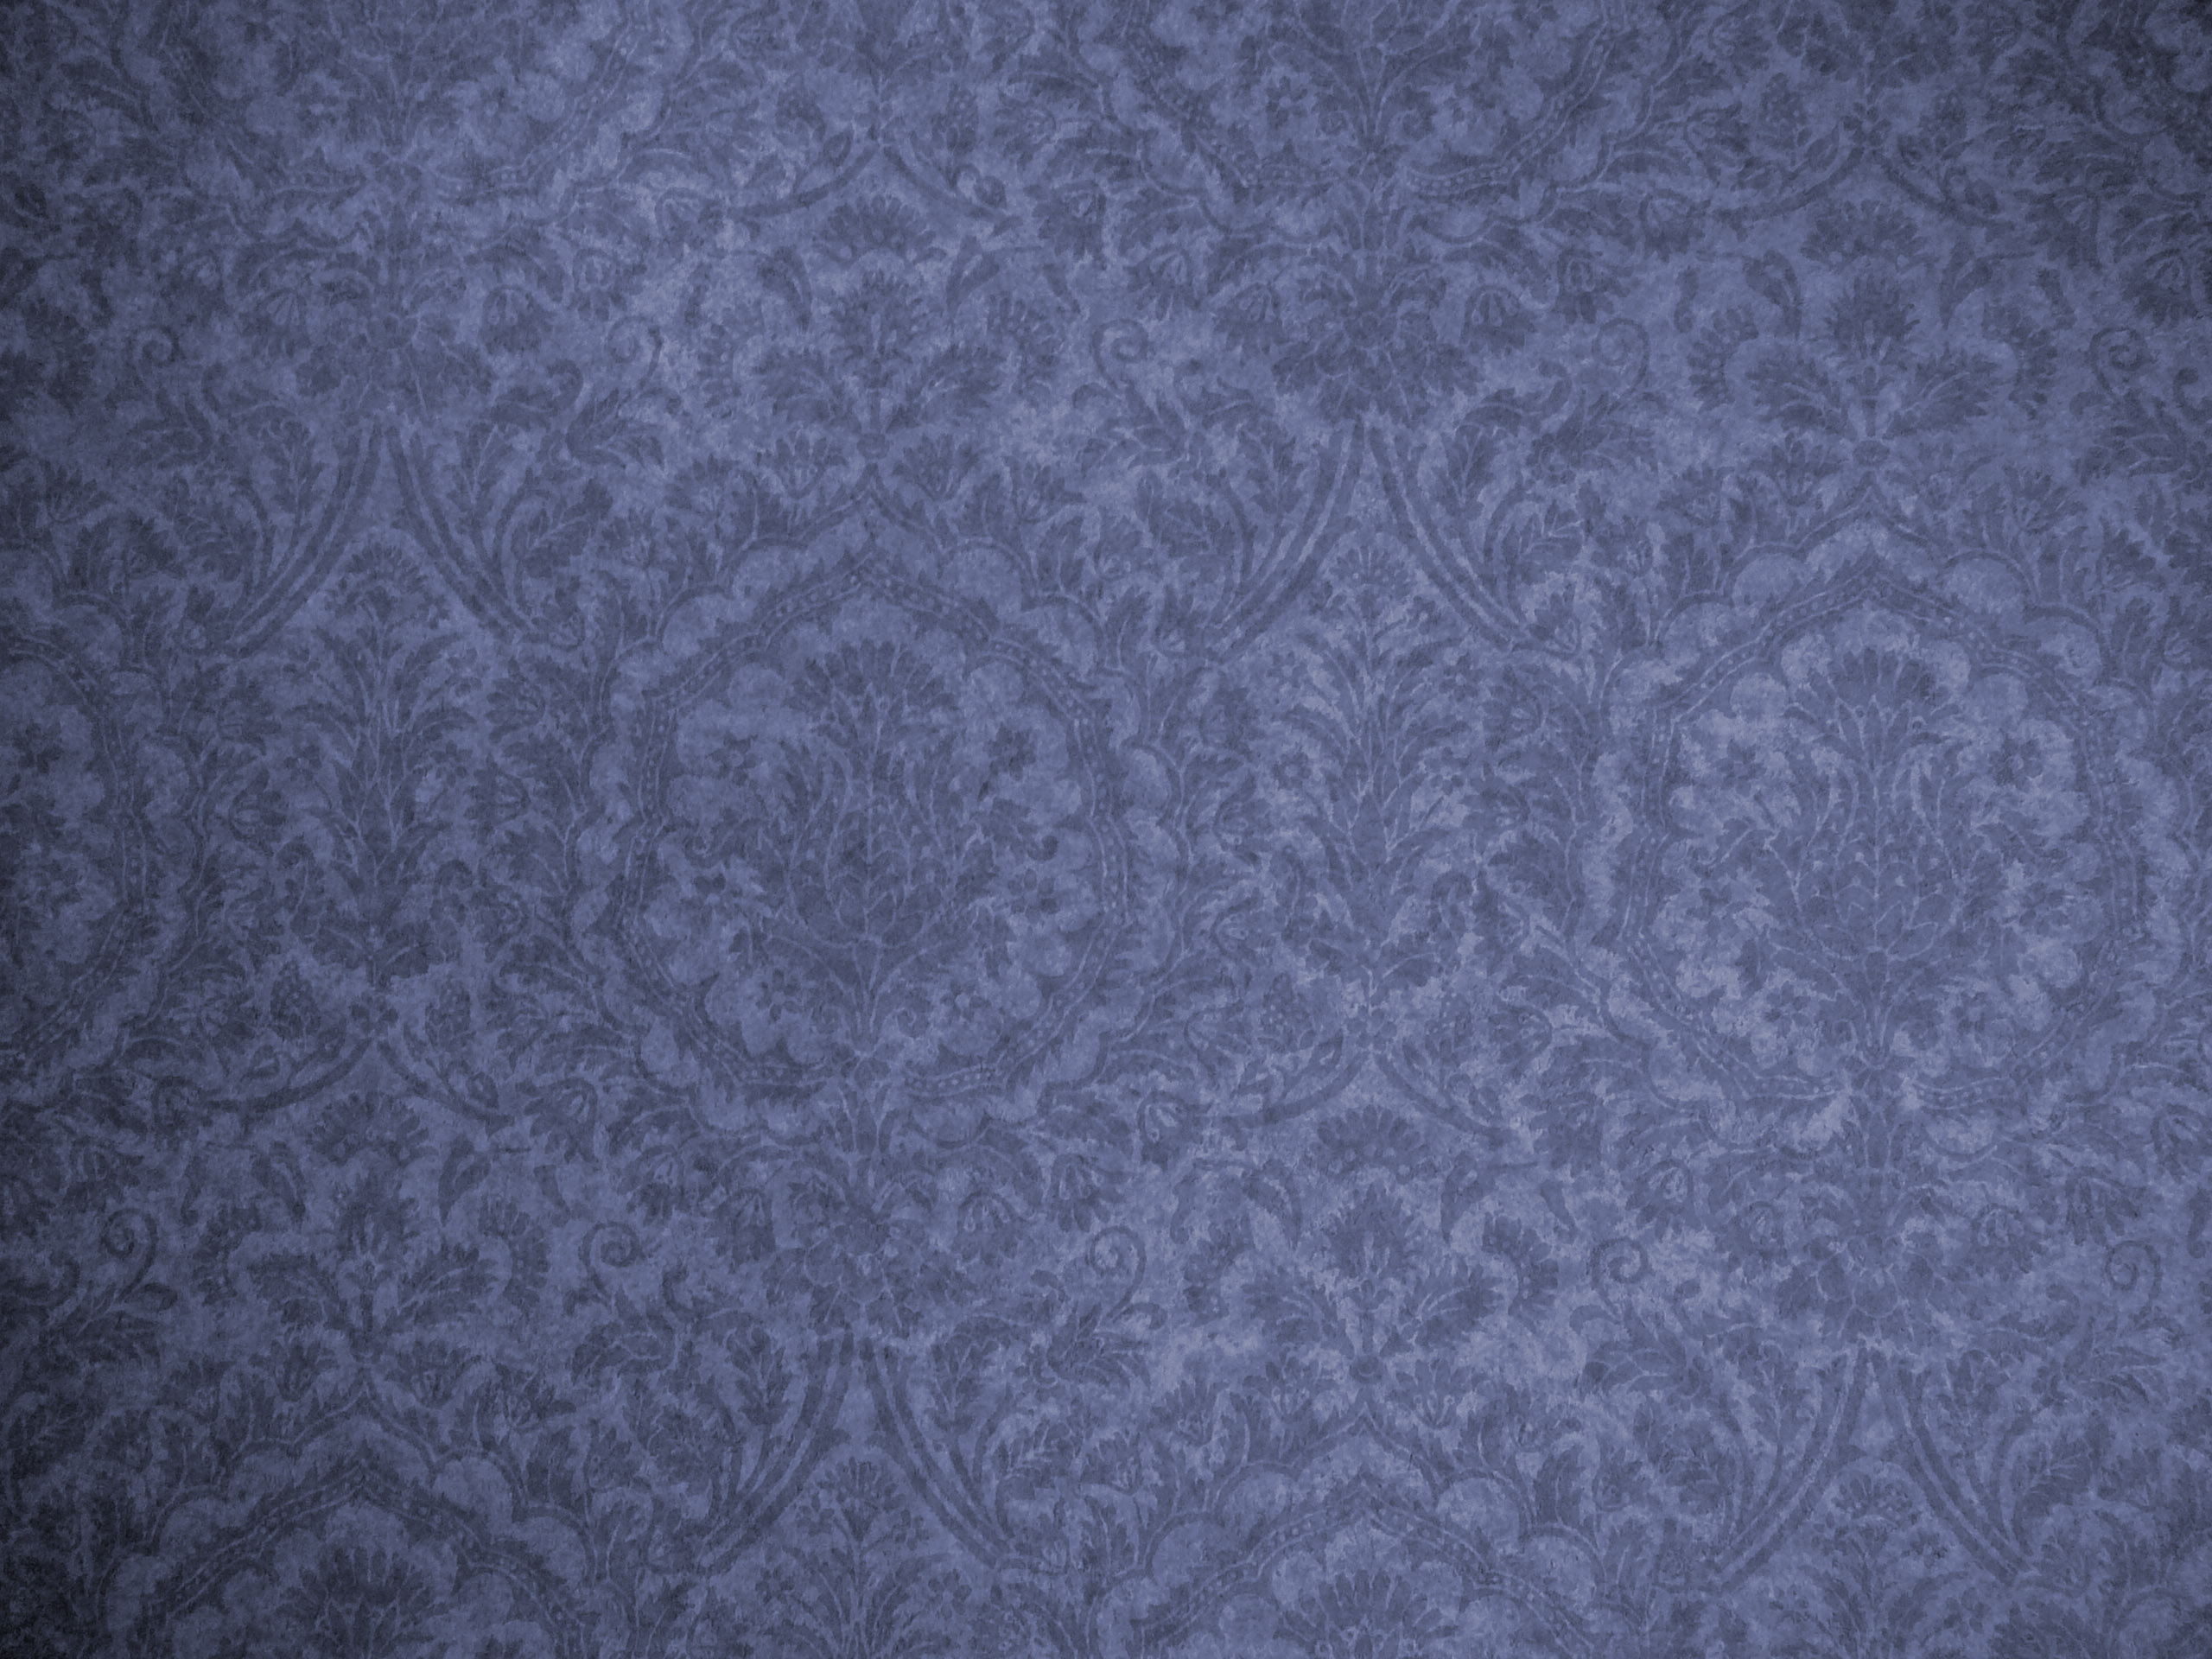 Textured Wallpaper Designs Grasscloth